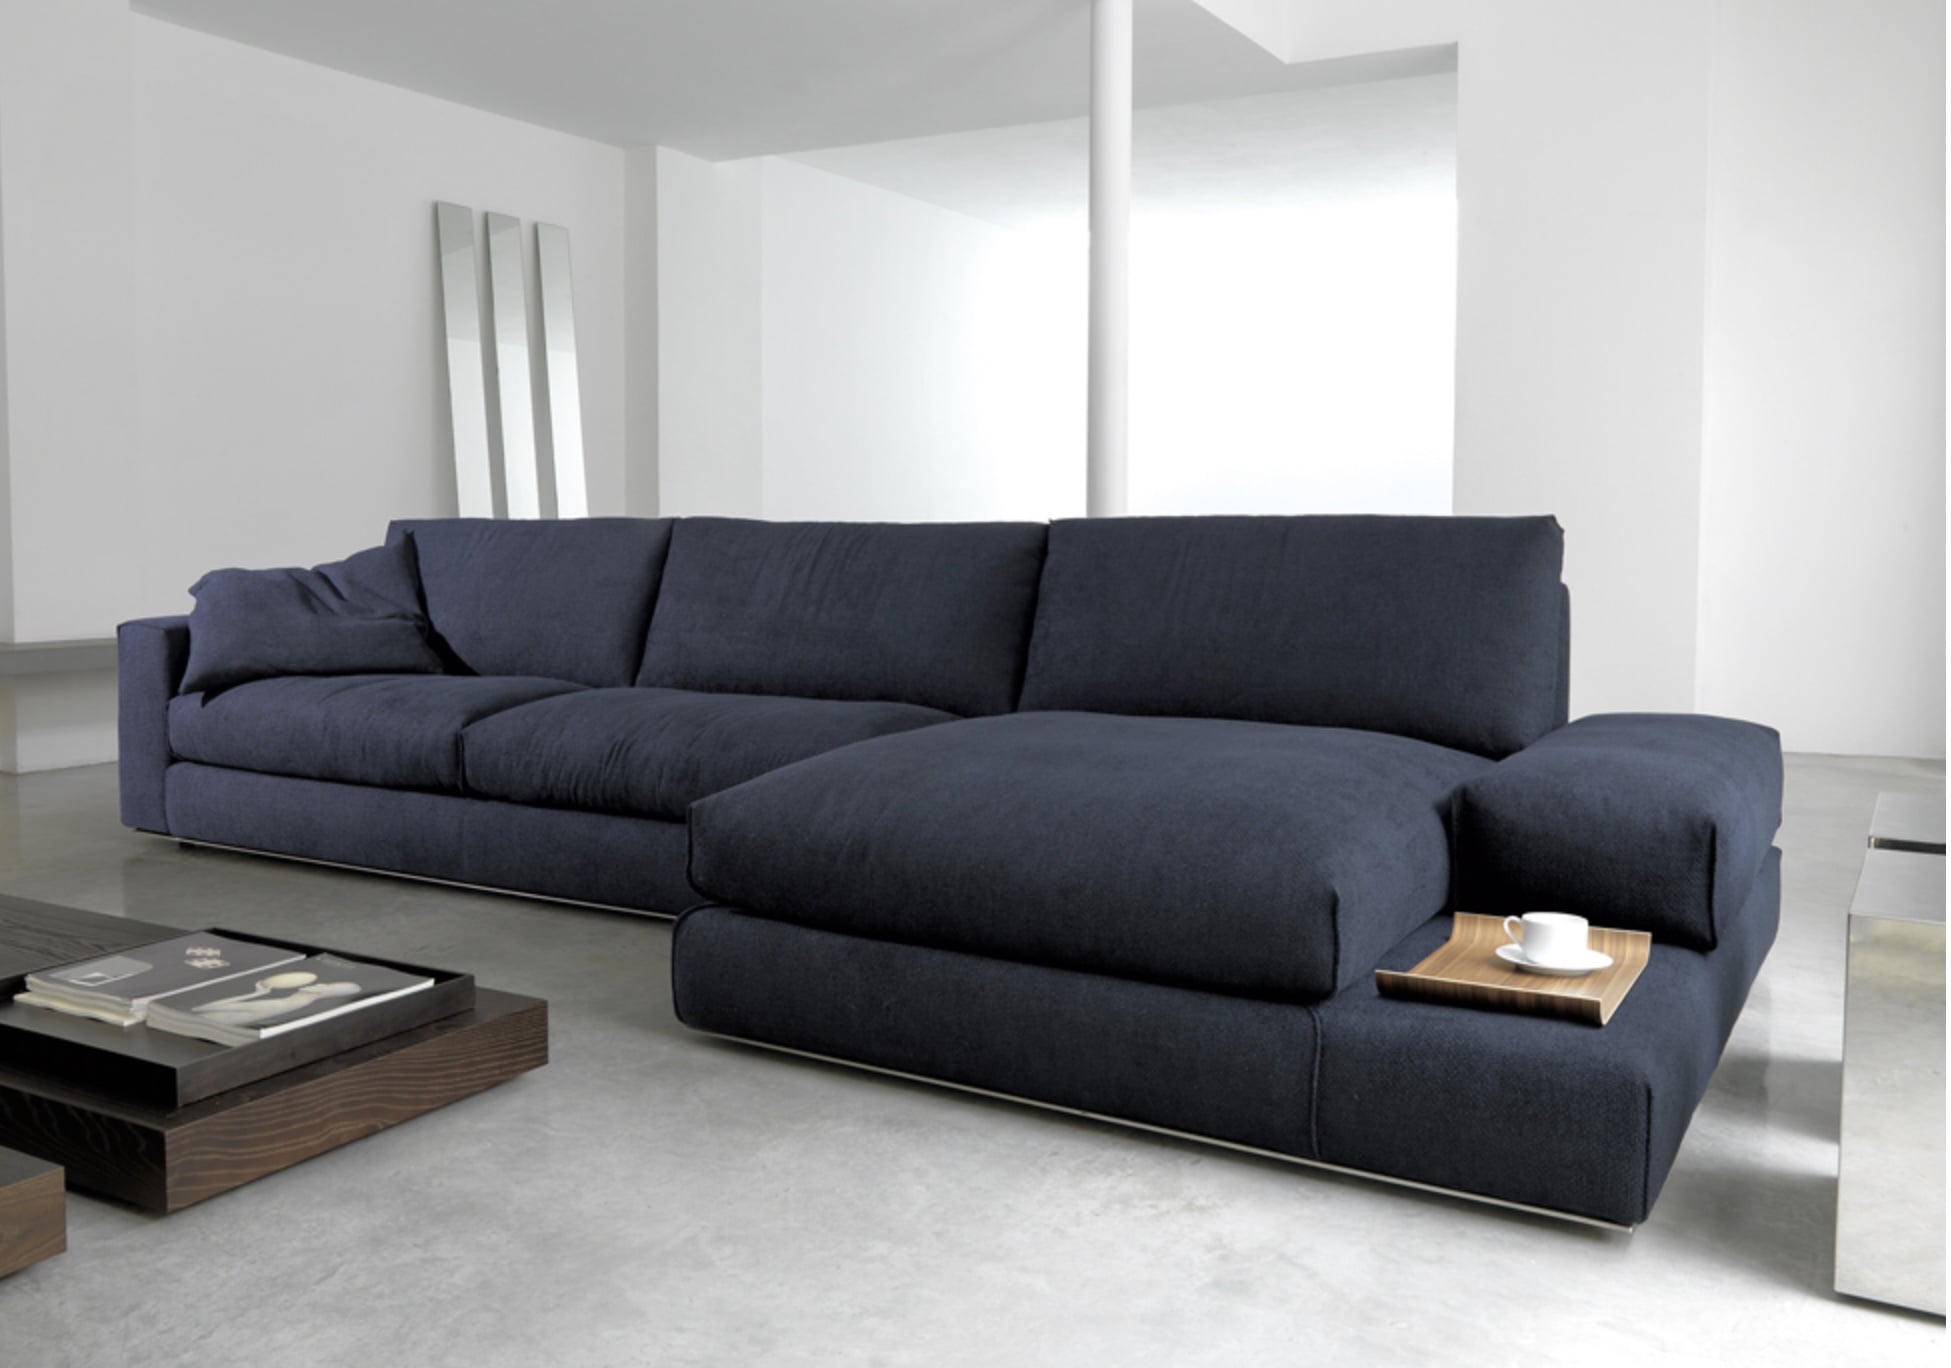 Made to Order Furniture. - Sofa 013-01